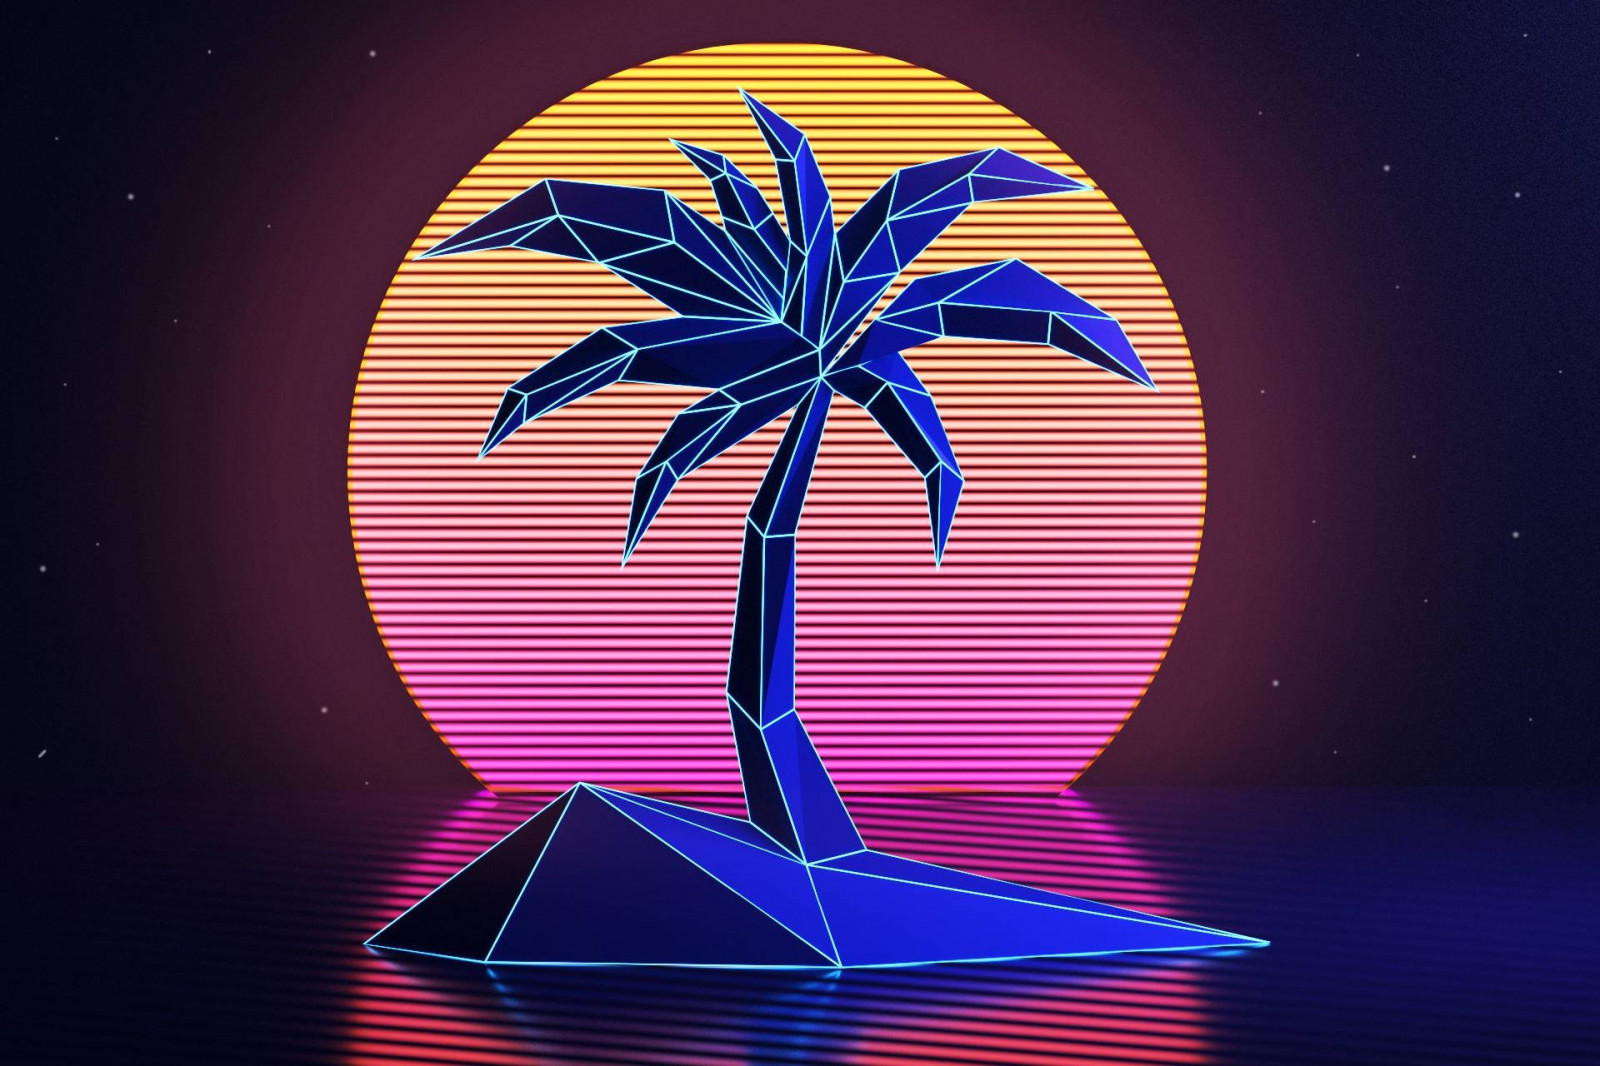 A digital palm tree on a digital island in front of a digital sun - Earth